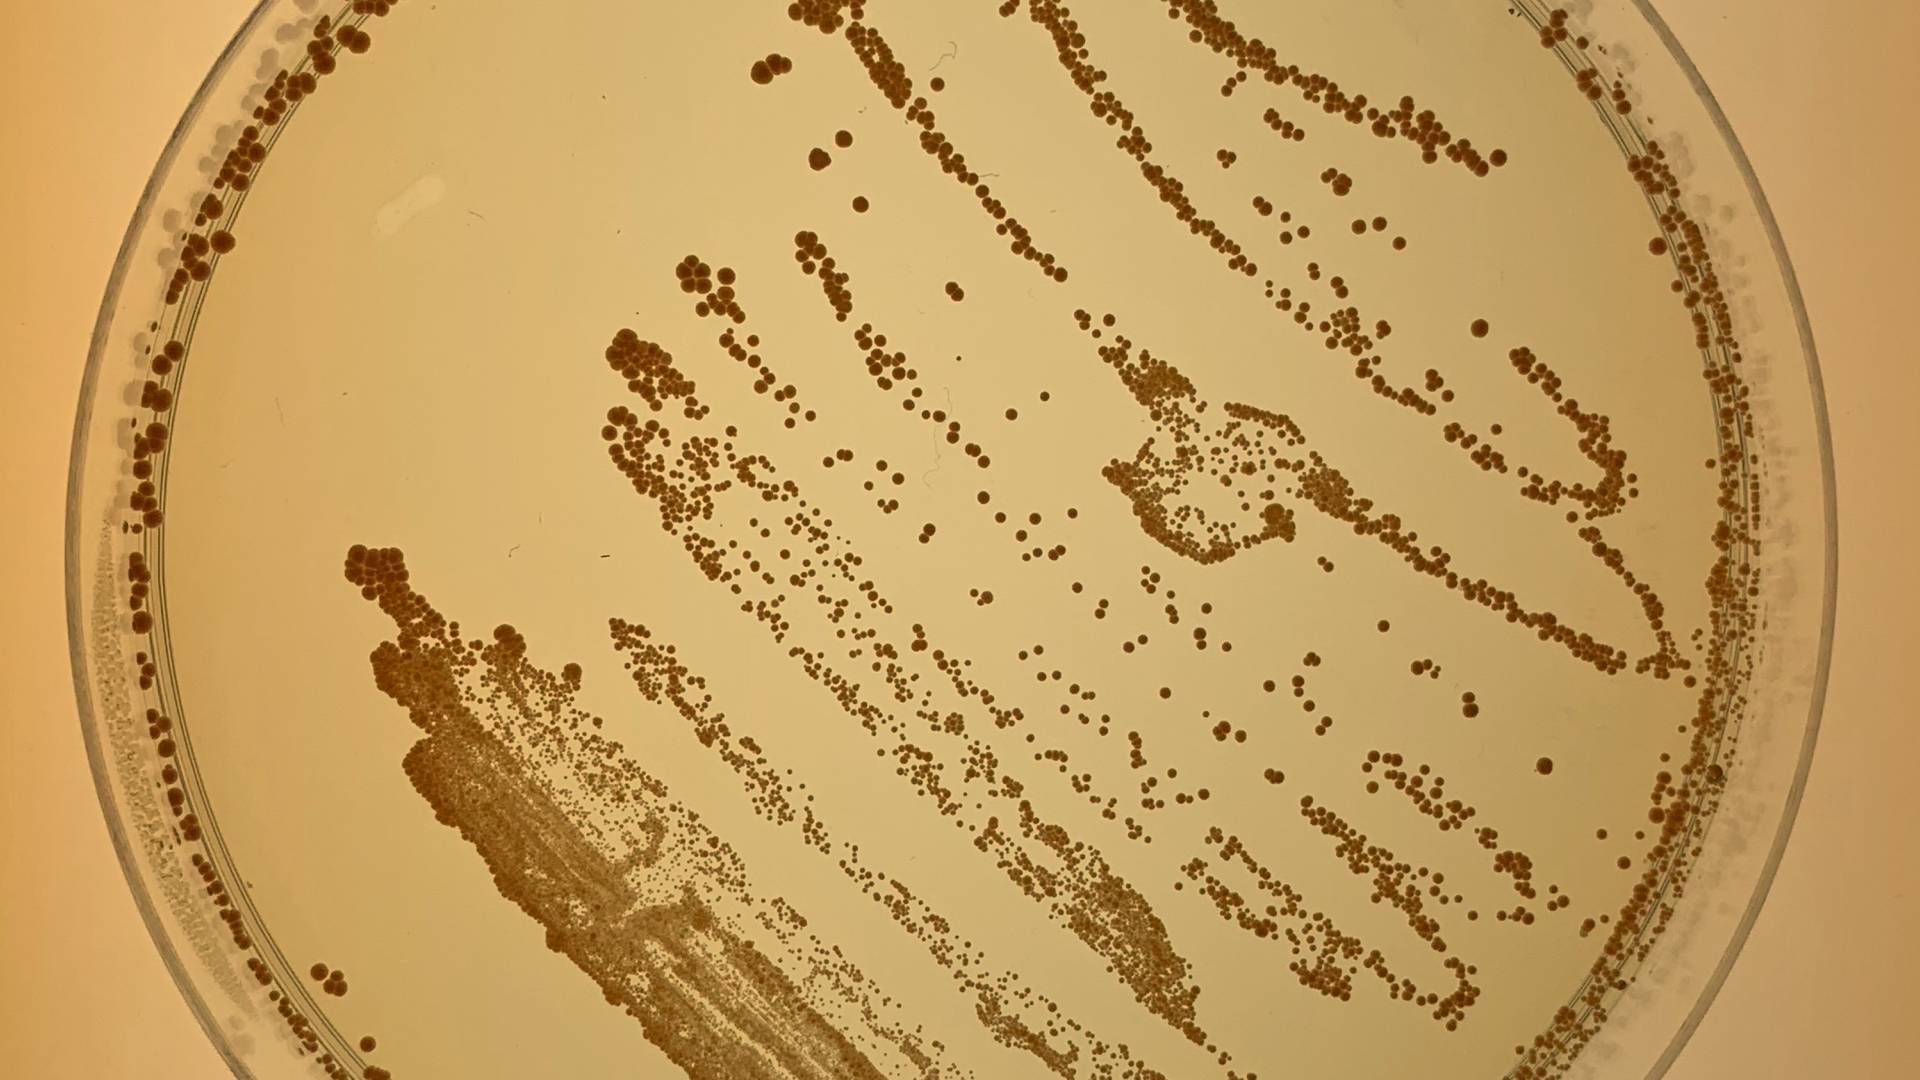 Closeup of bacteria in a petri dish